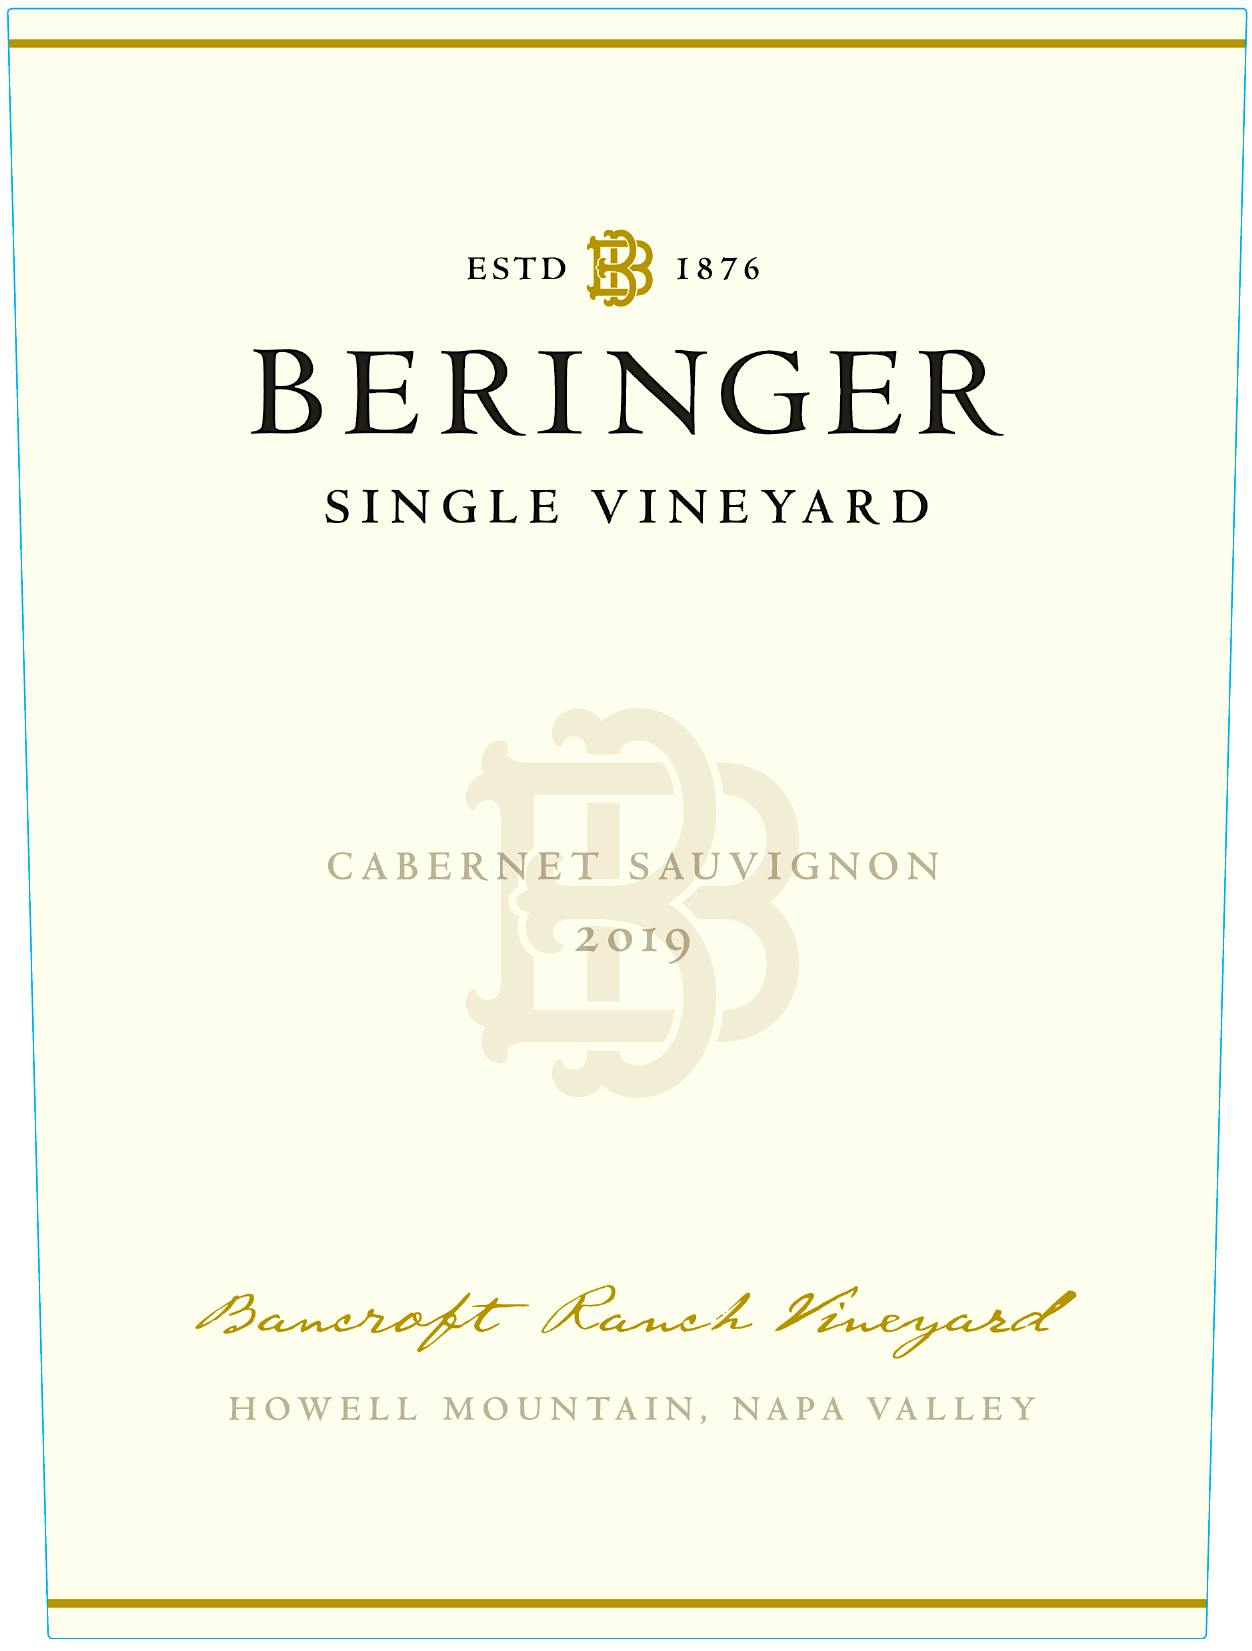 Label for Beringer